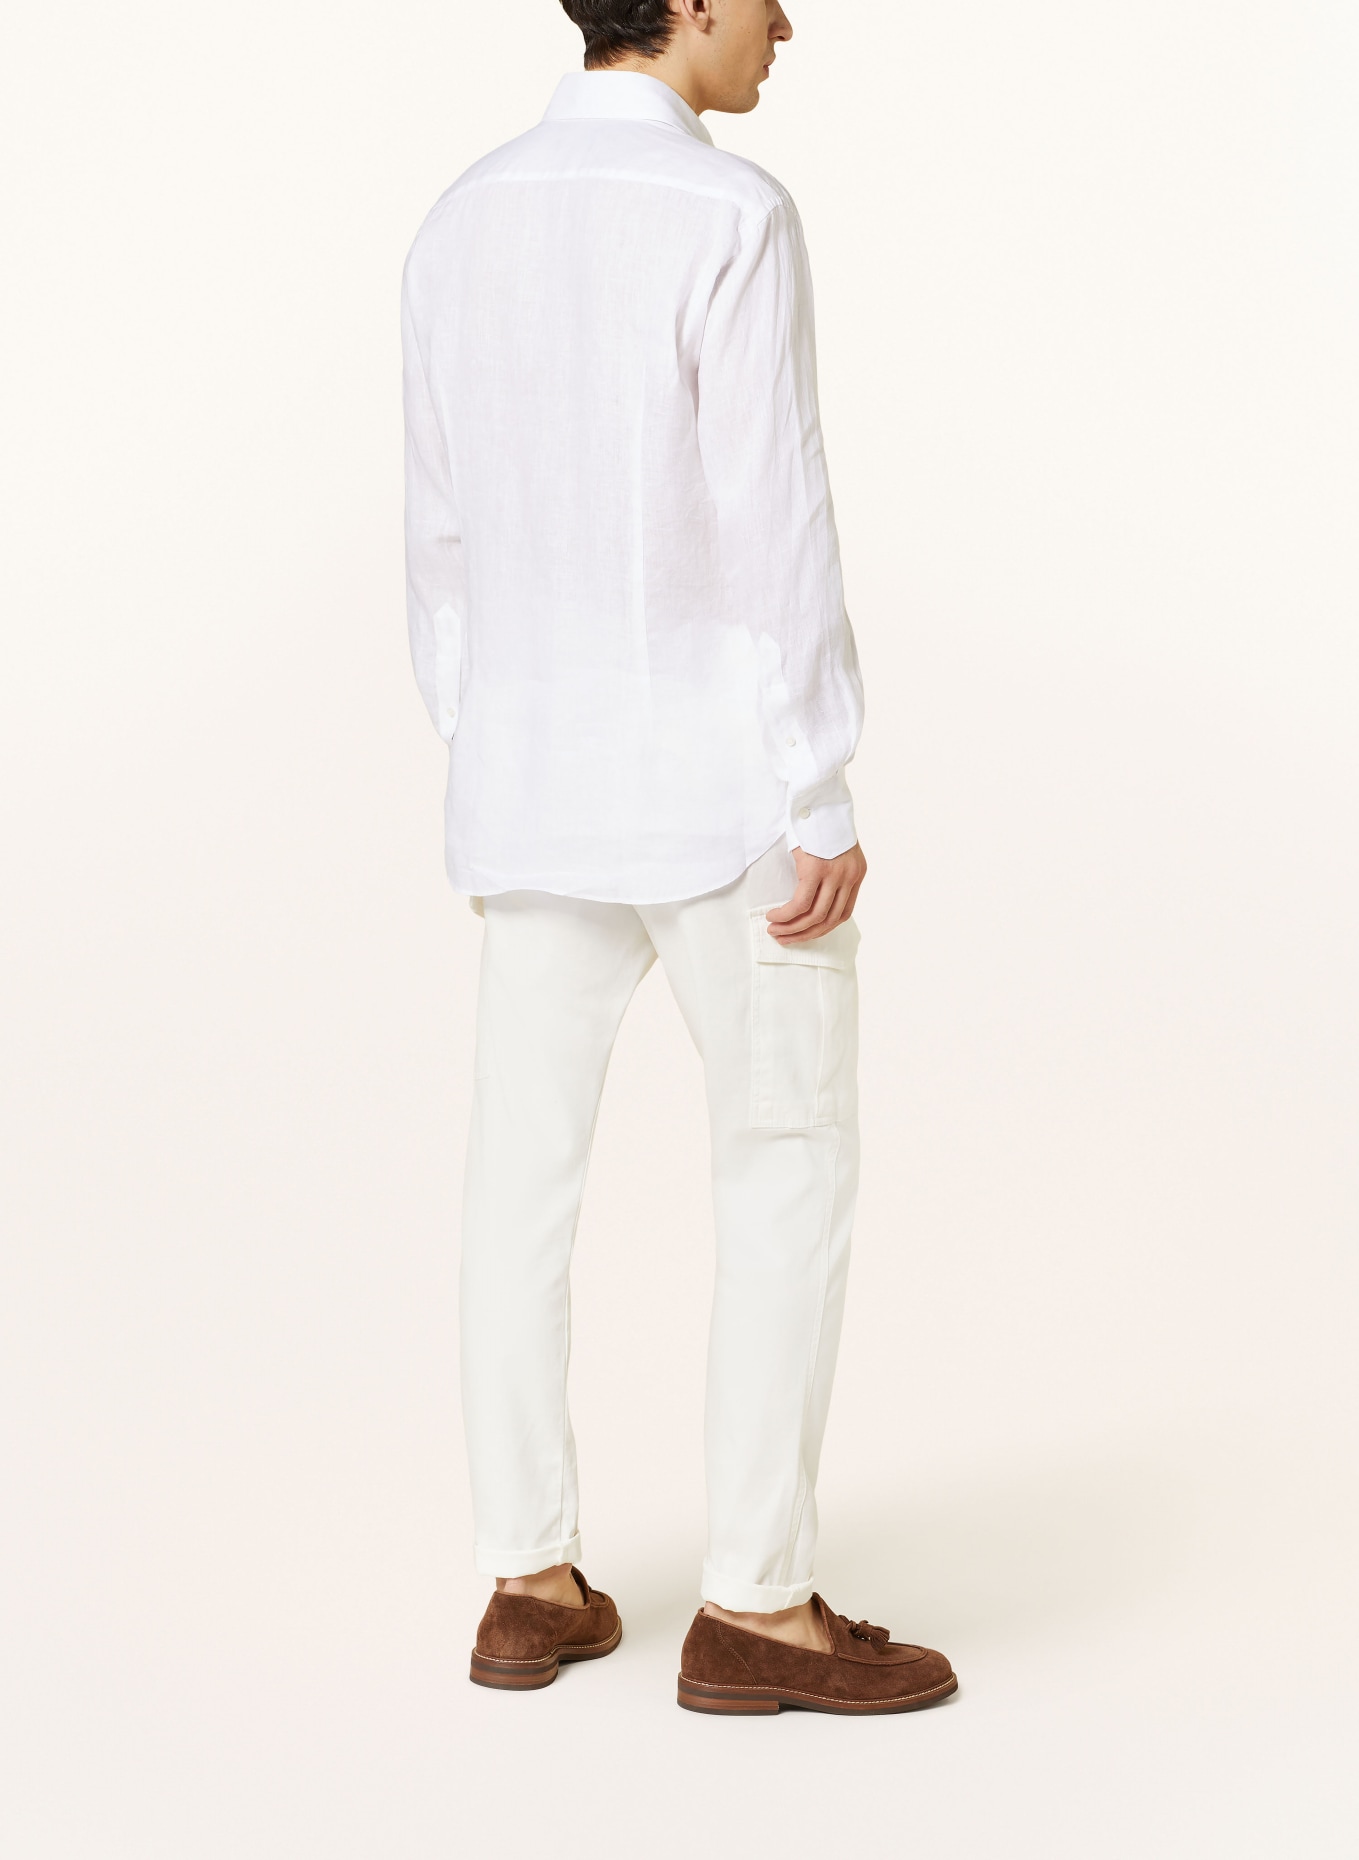 ARTIGIANO Linen shirt classic fit, Color: 1 uni white (Image 3)